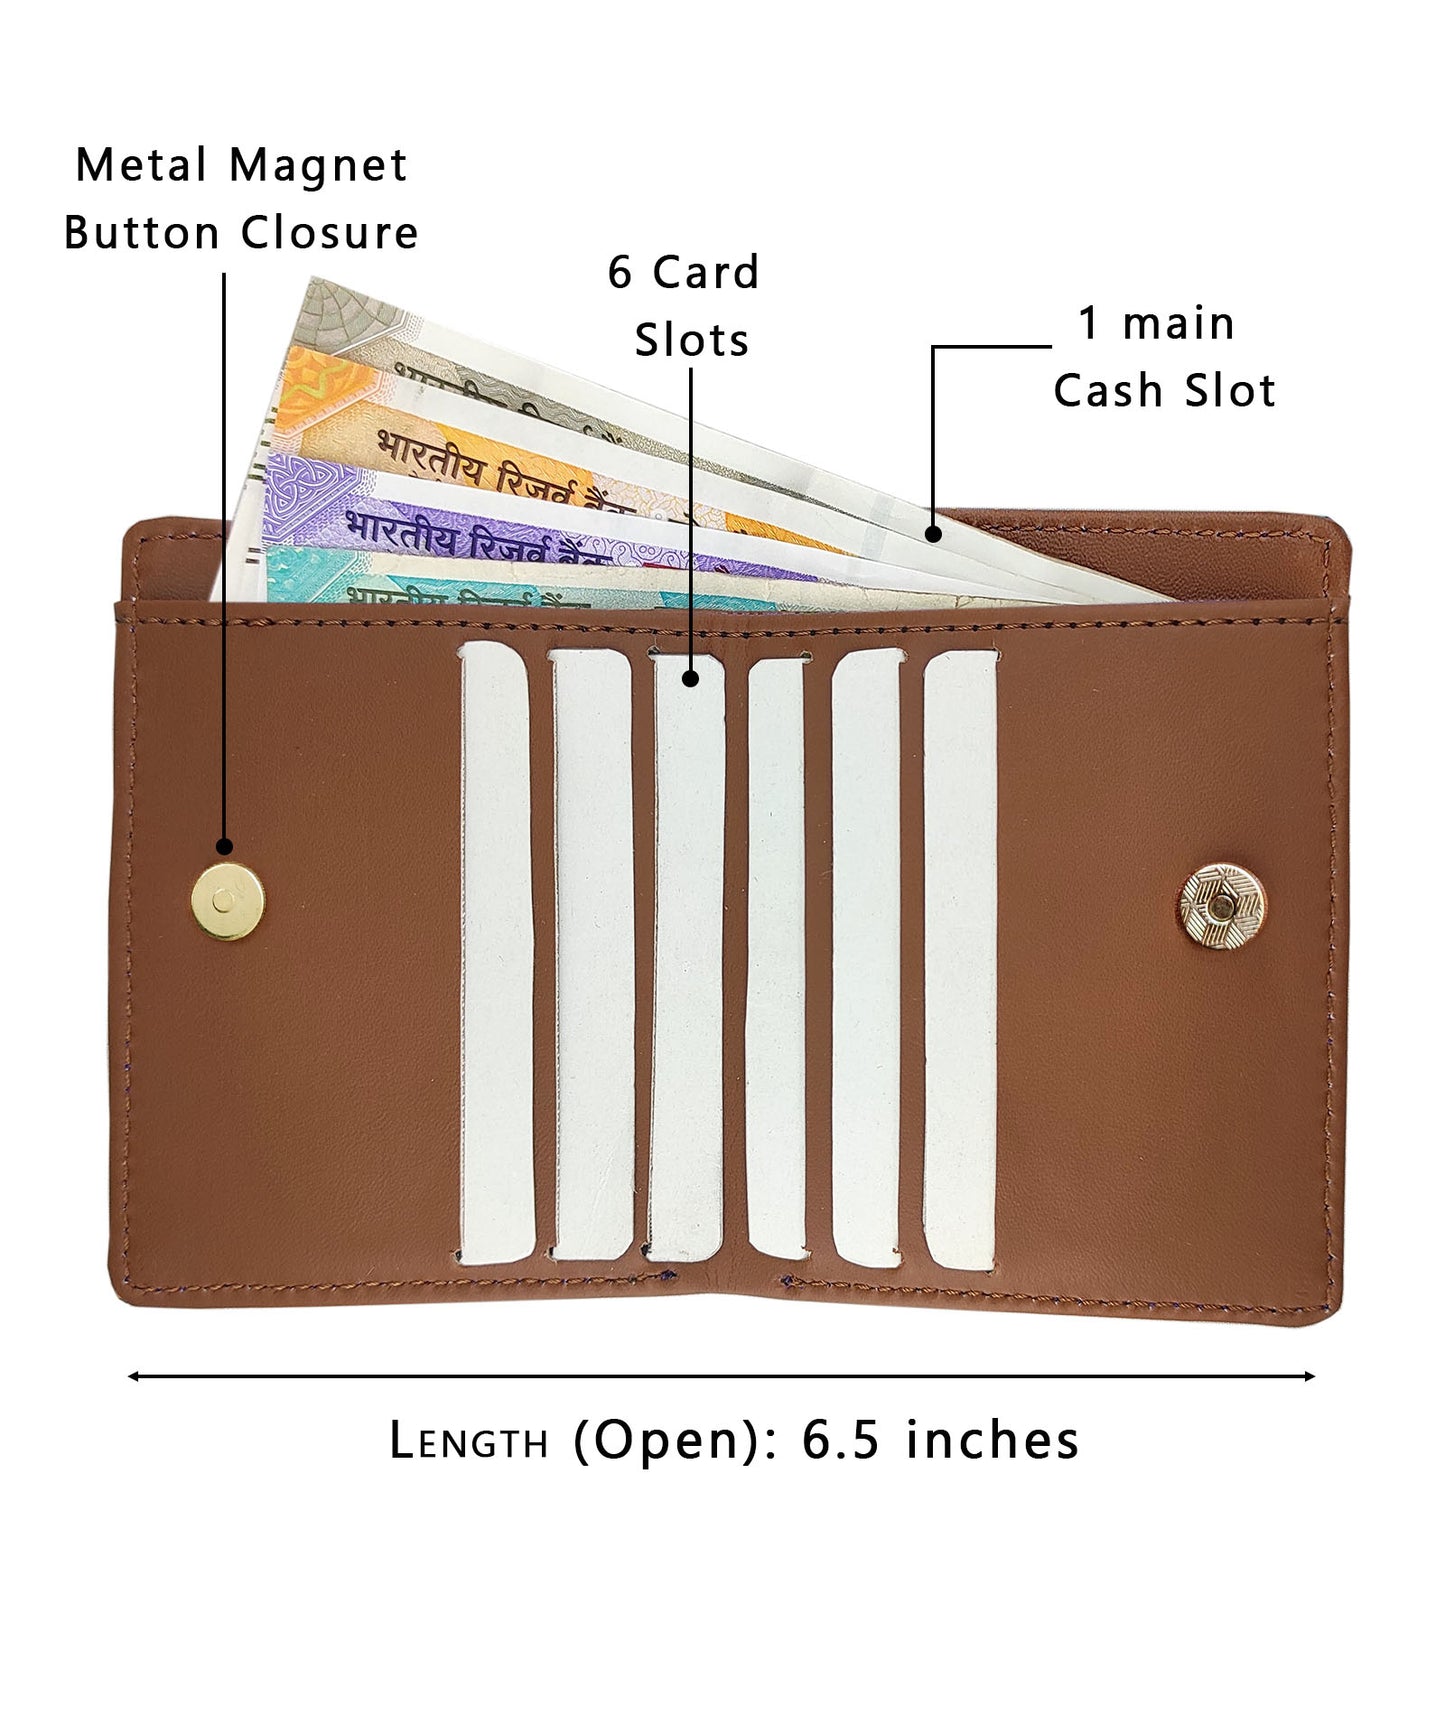 Combo Offers : Match Checks Drawstring Bag & Wall Pocket Black Wallet